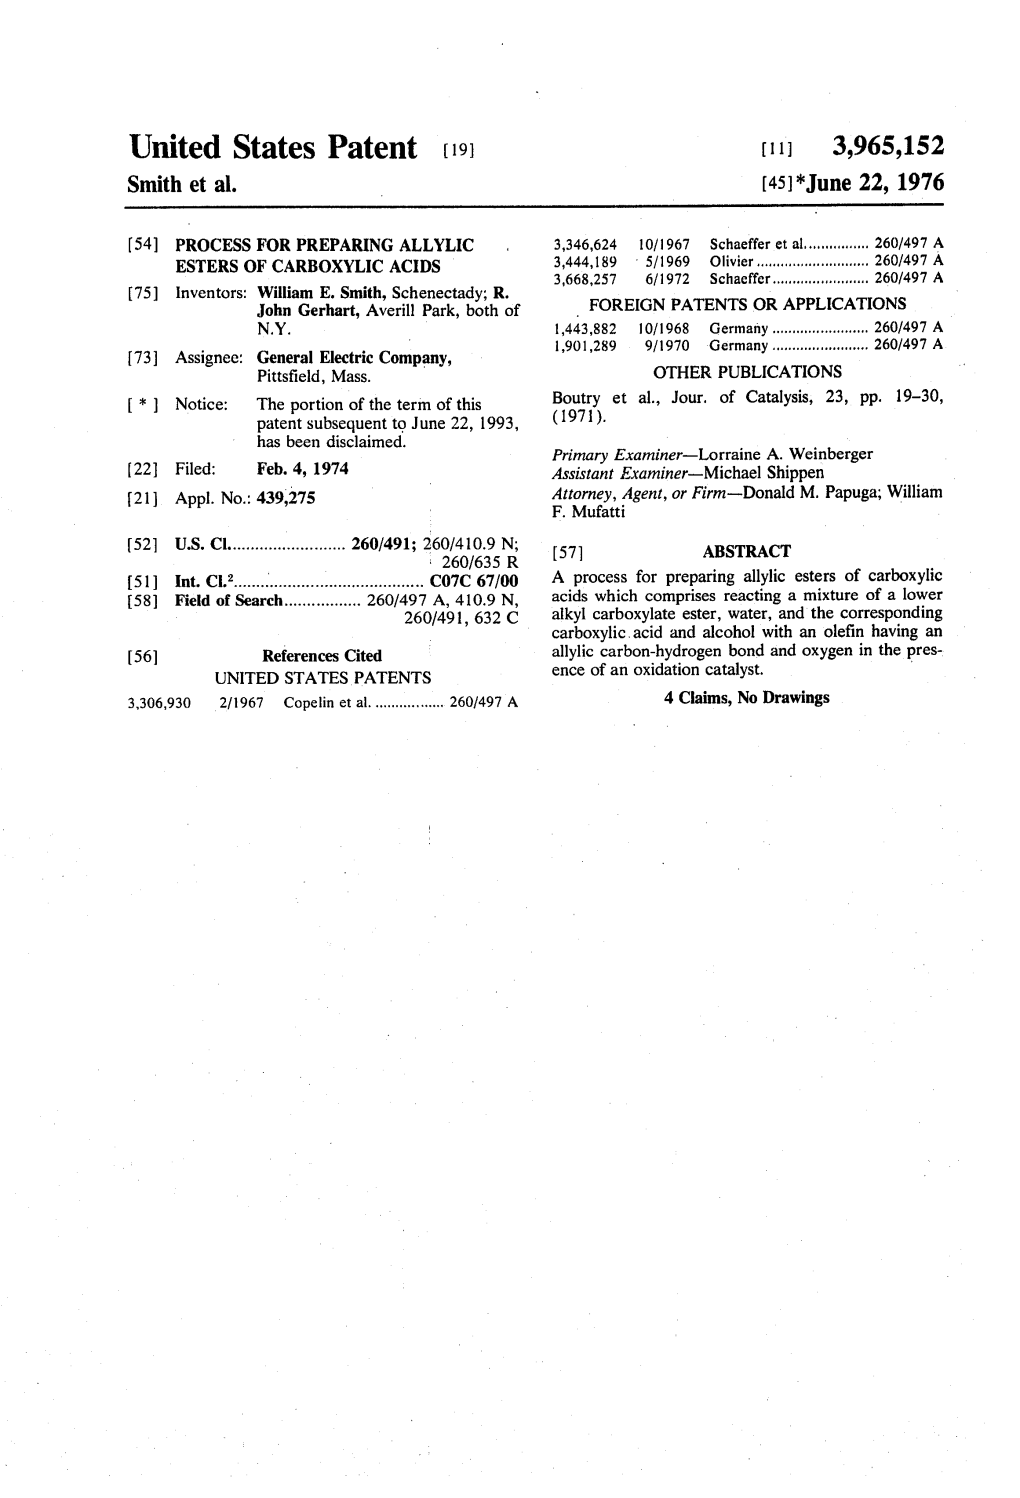 United States Patent 19 11, 3,965,152 Smith Et Al